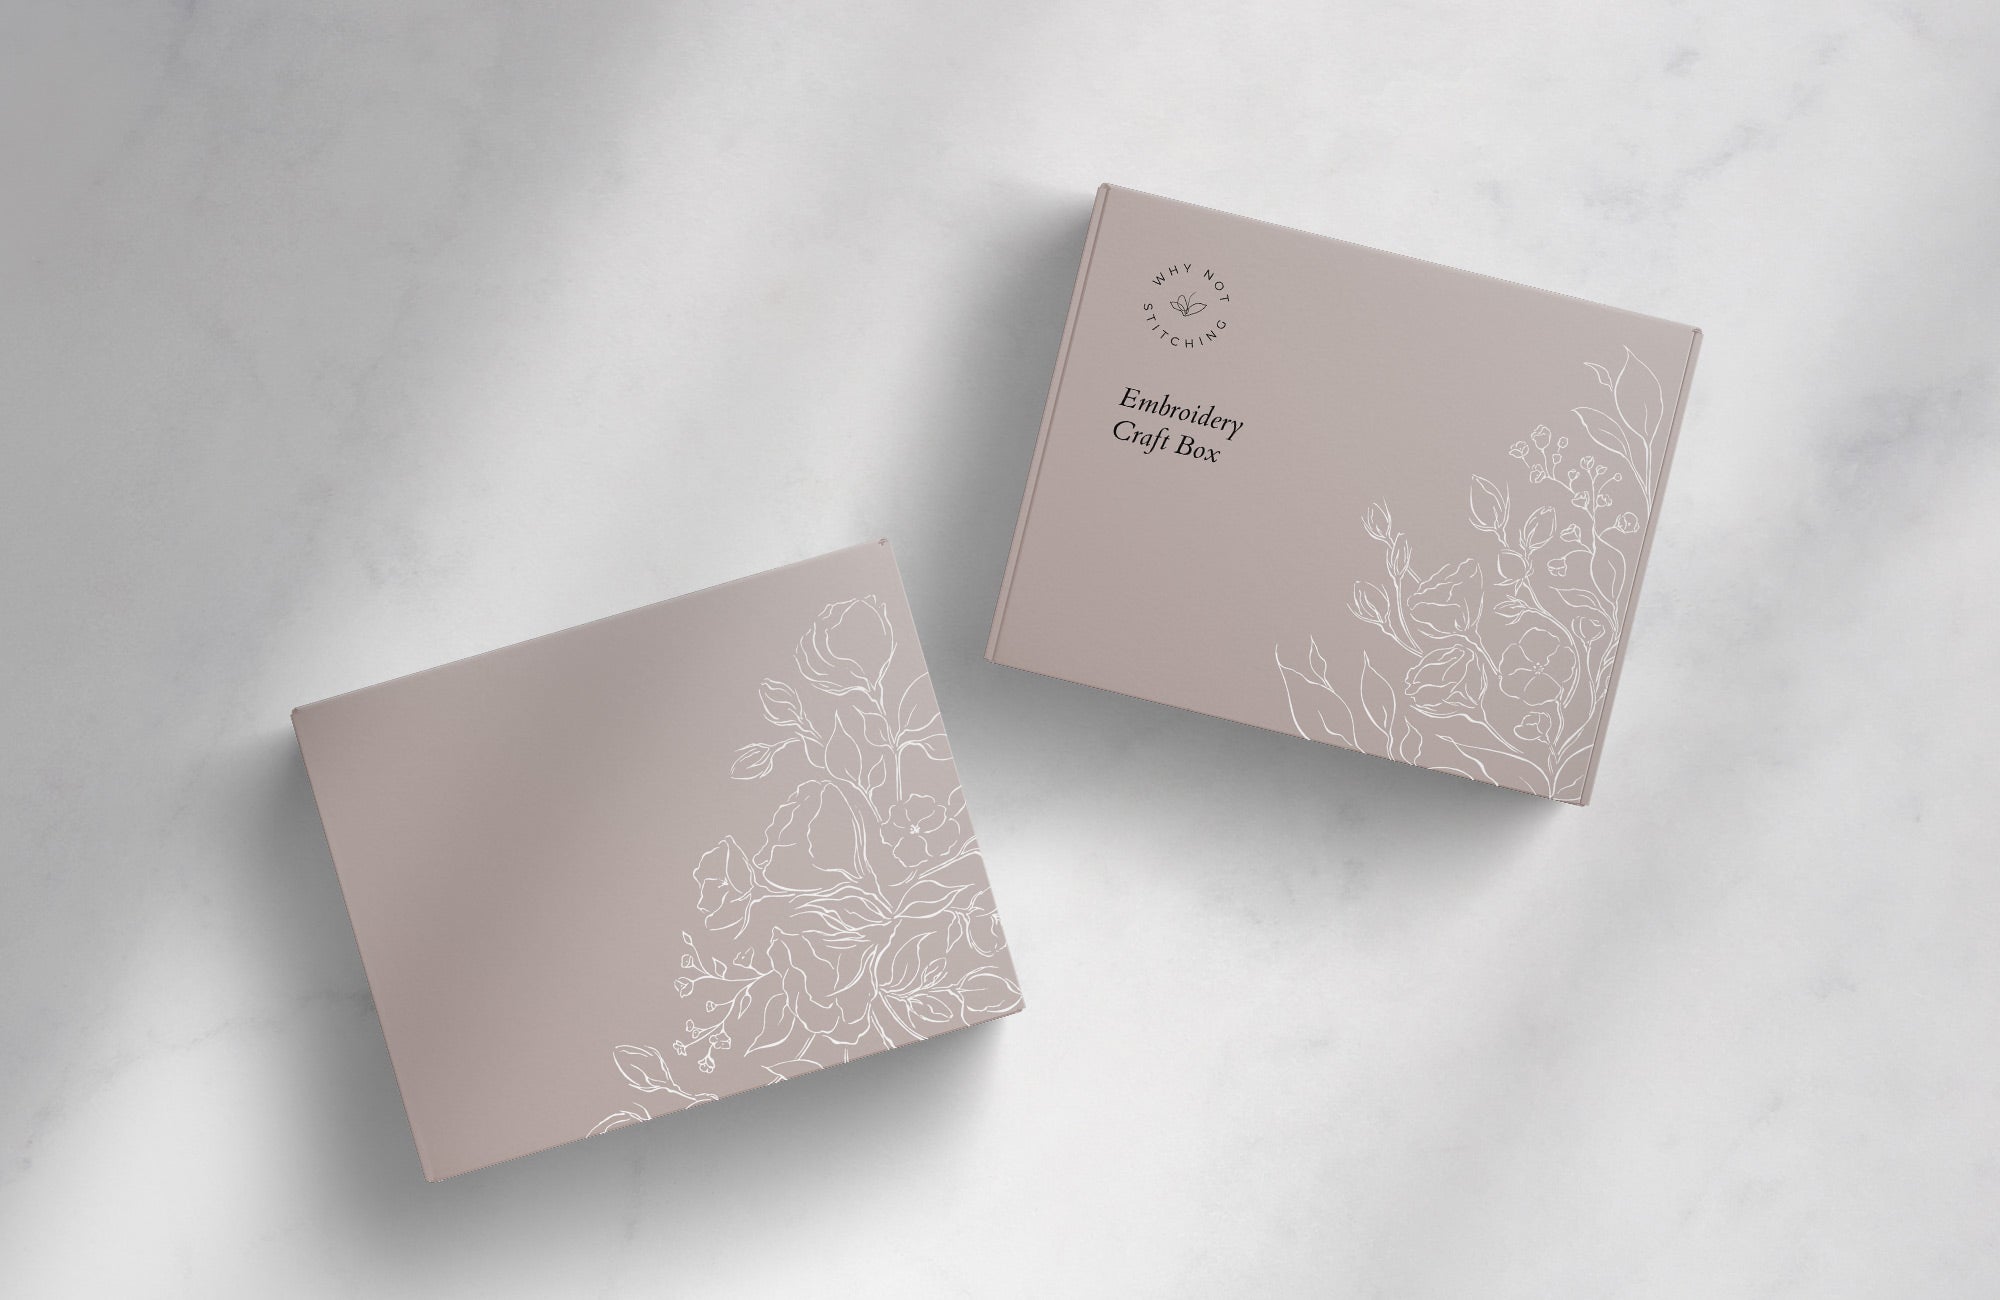 karolina krol studio why not stitching sustainable minimalist custom botanical illustrations shipping box packaging design